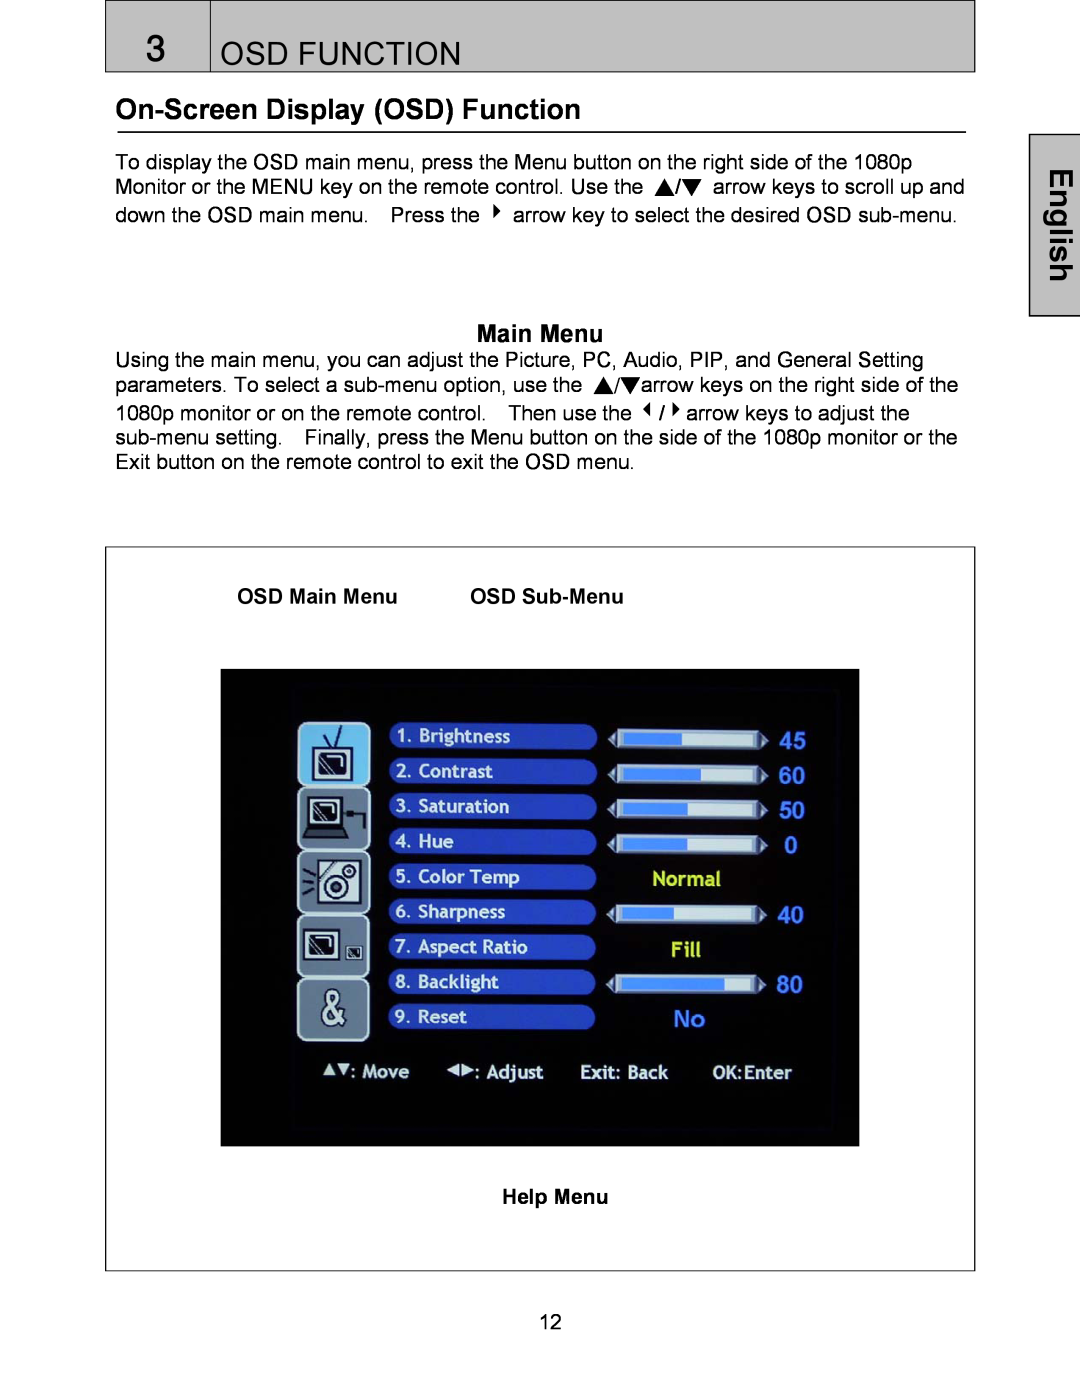 Westinghouse LVM-37w3se user manual Osd Function, On-Screen Display OSD Function, Main Menu, English 